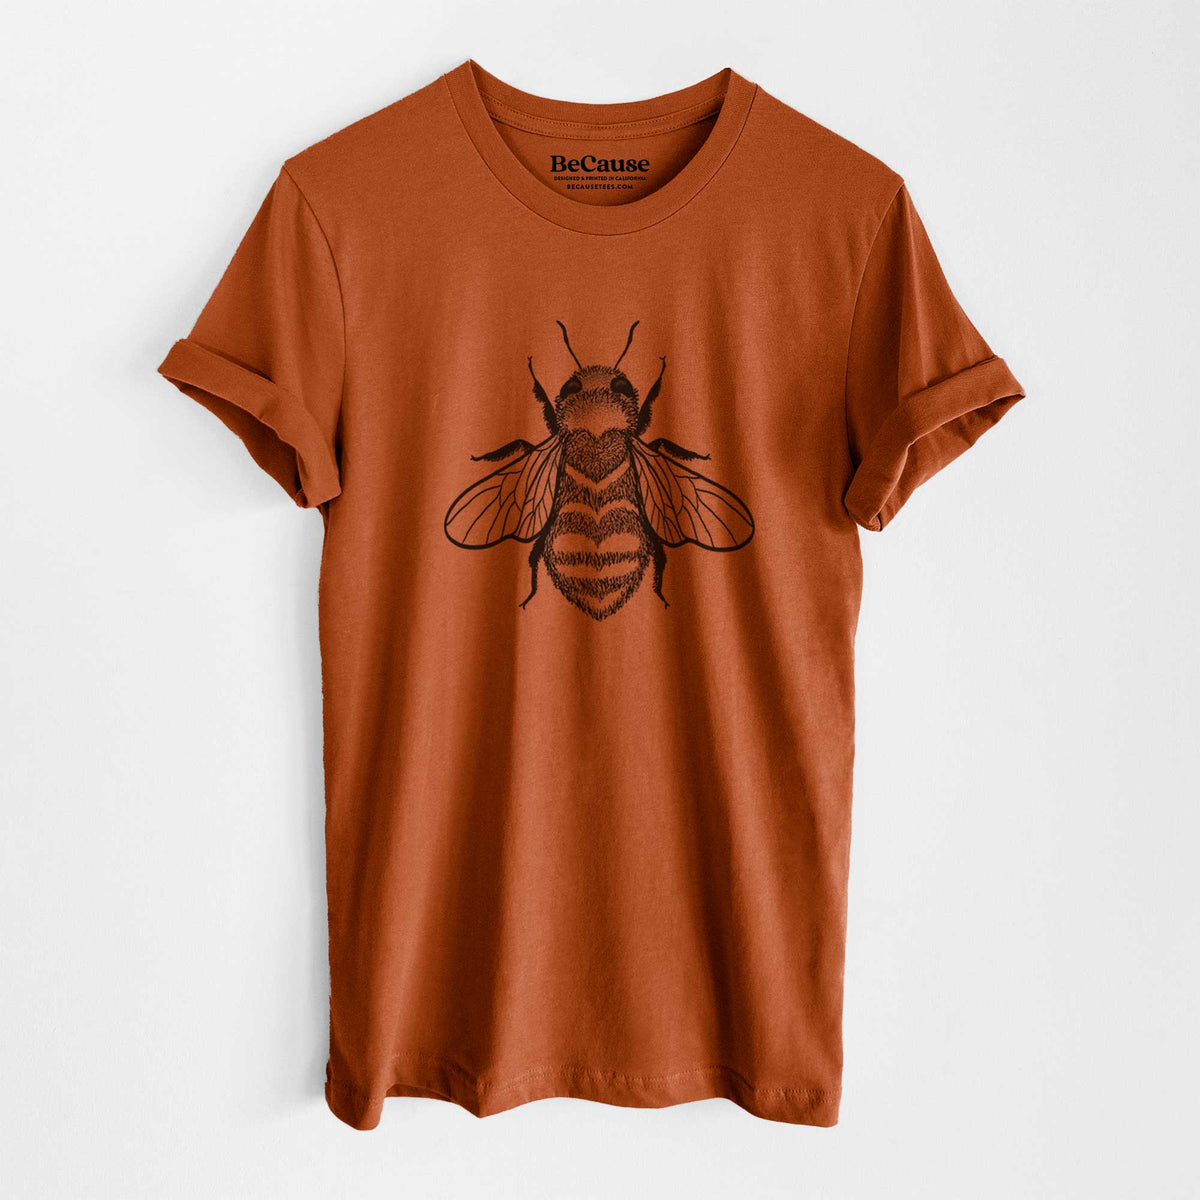 Bee Love - Lightweight 100% Cotton Unisex Crewneck